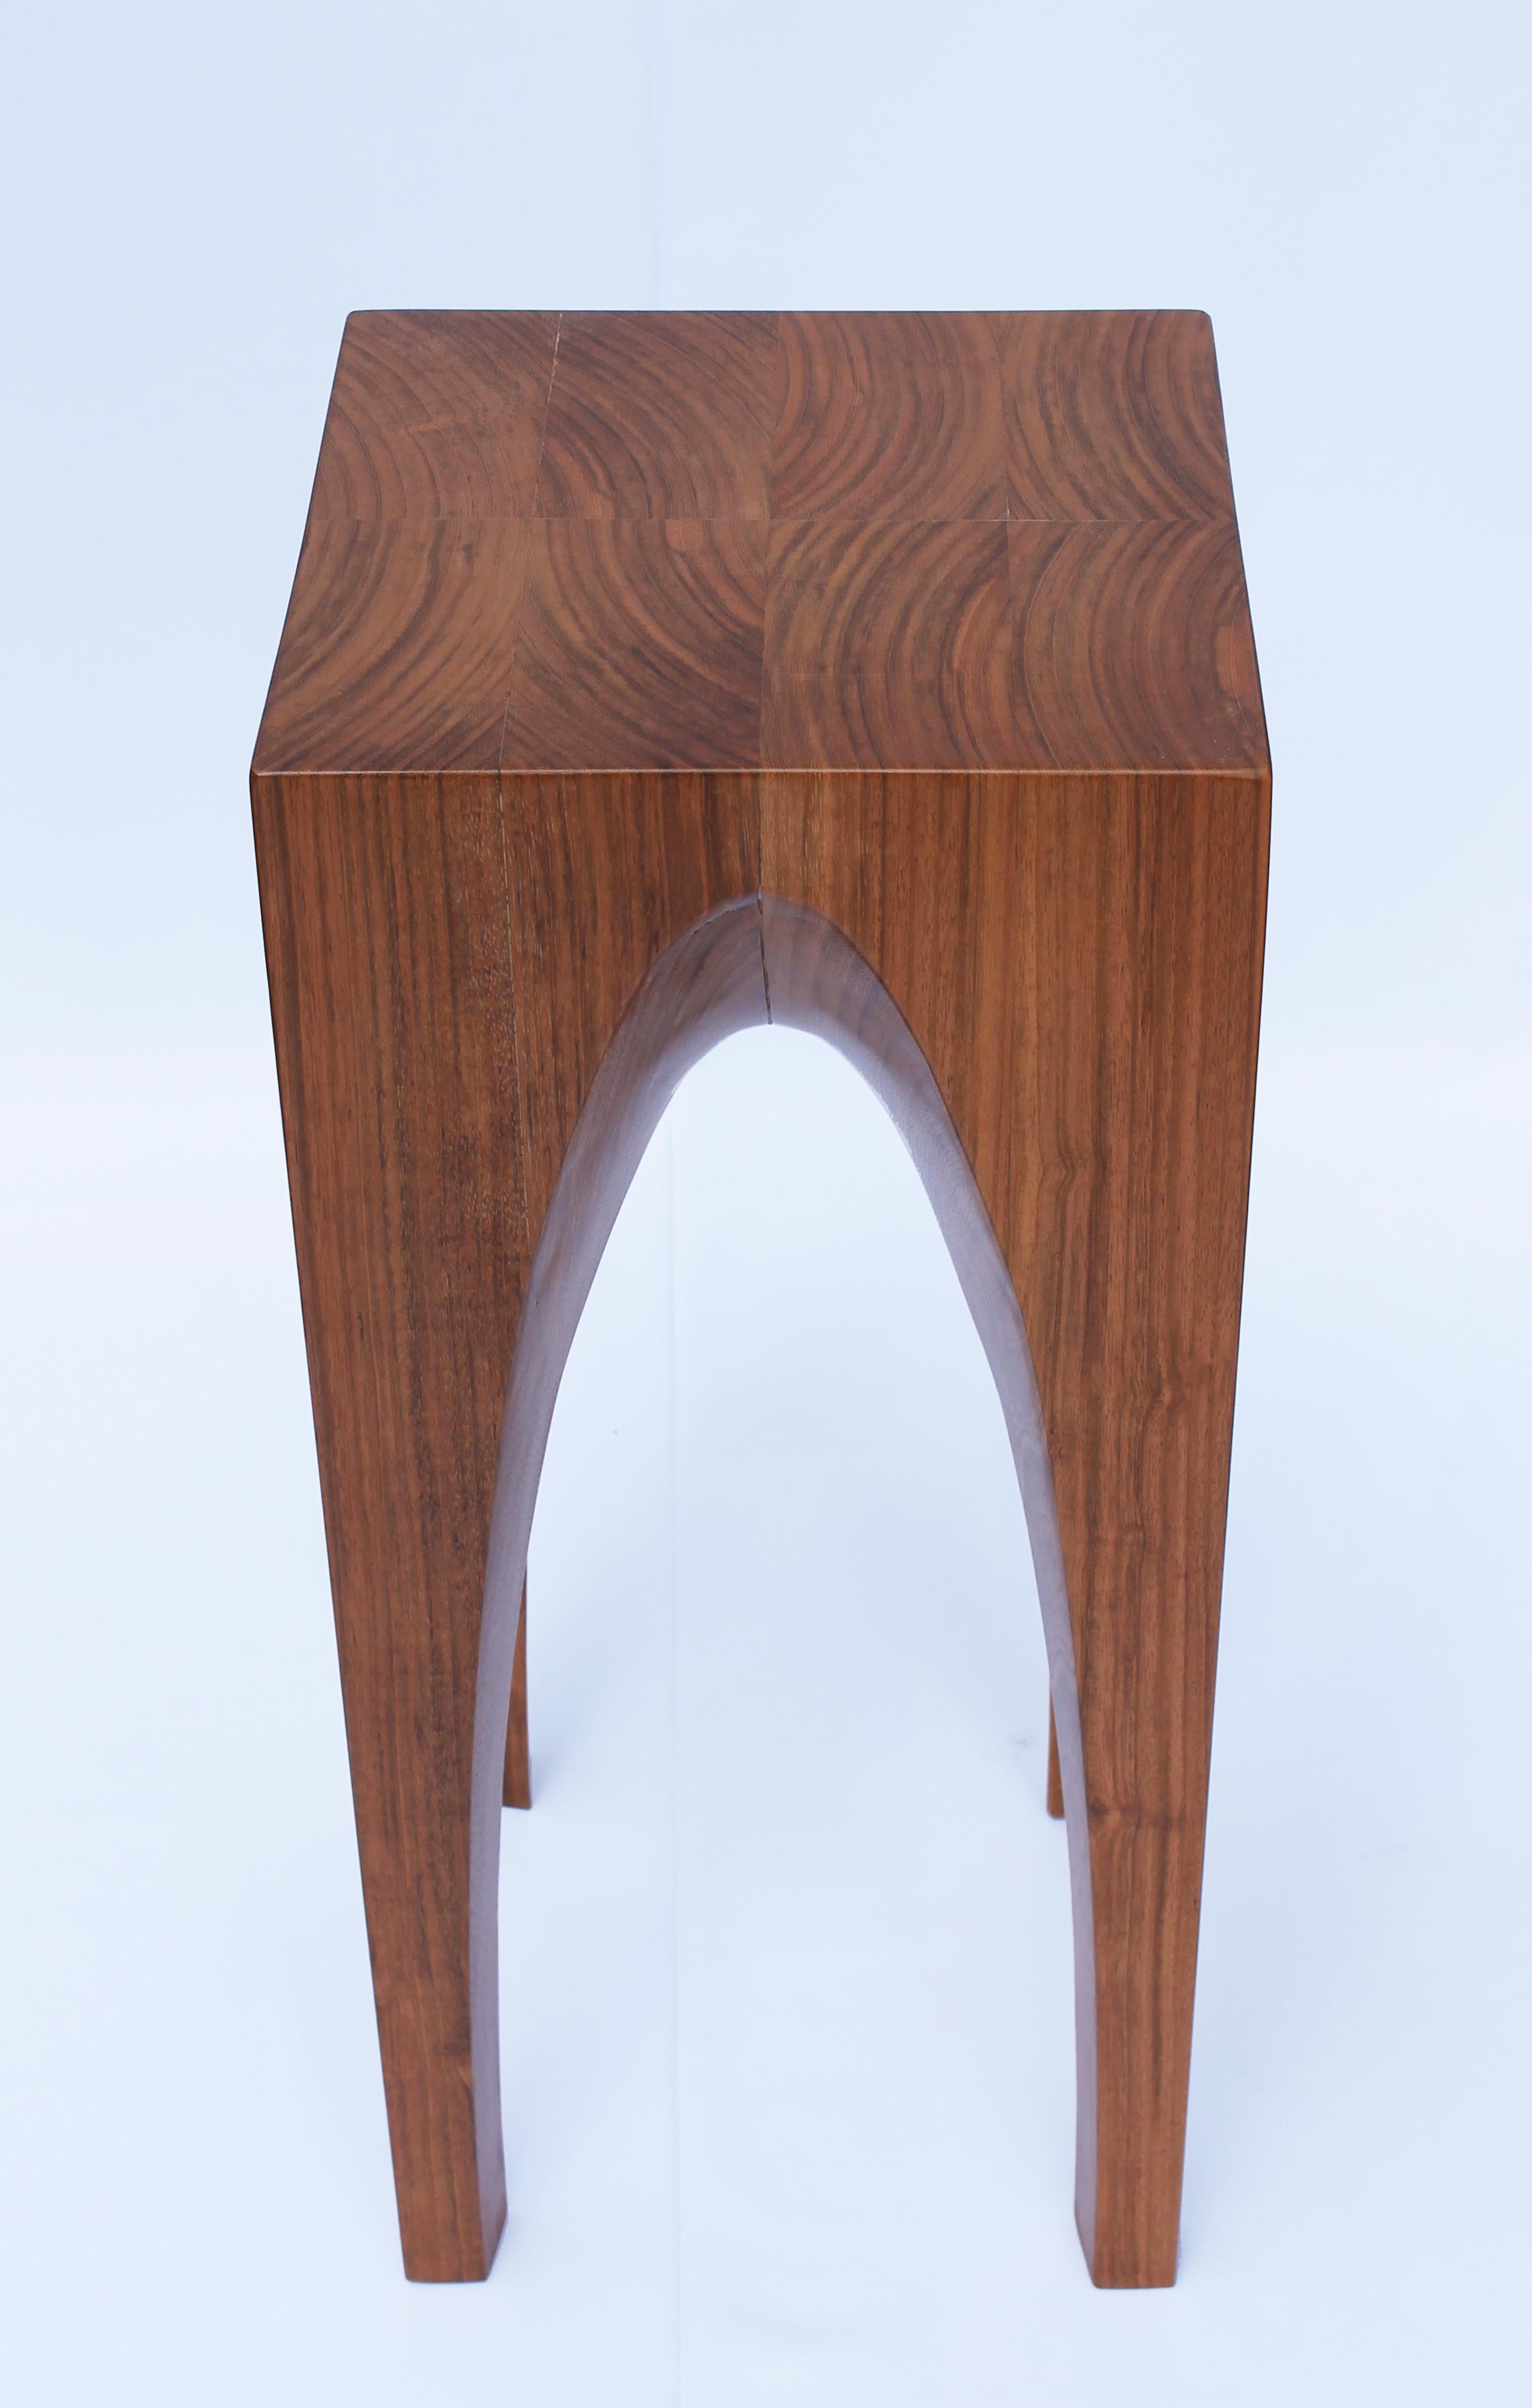 Modern Arch Side Table - Catenary Arch (Jatobá wood) For Sale